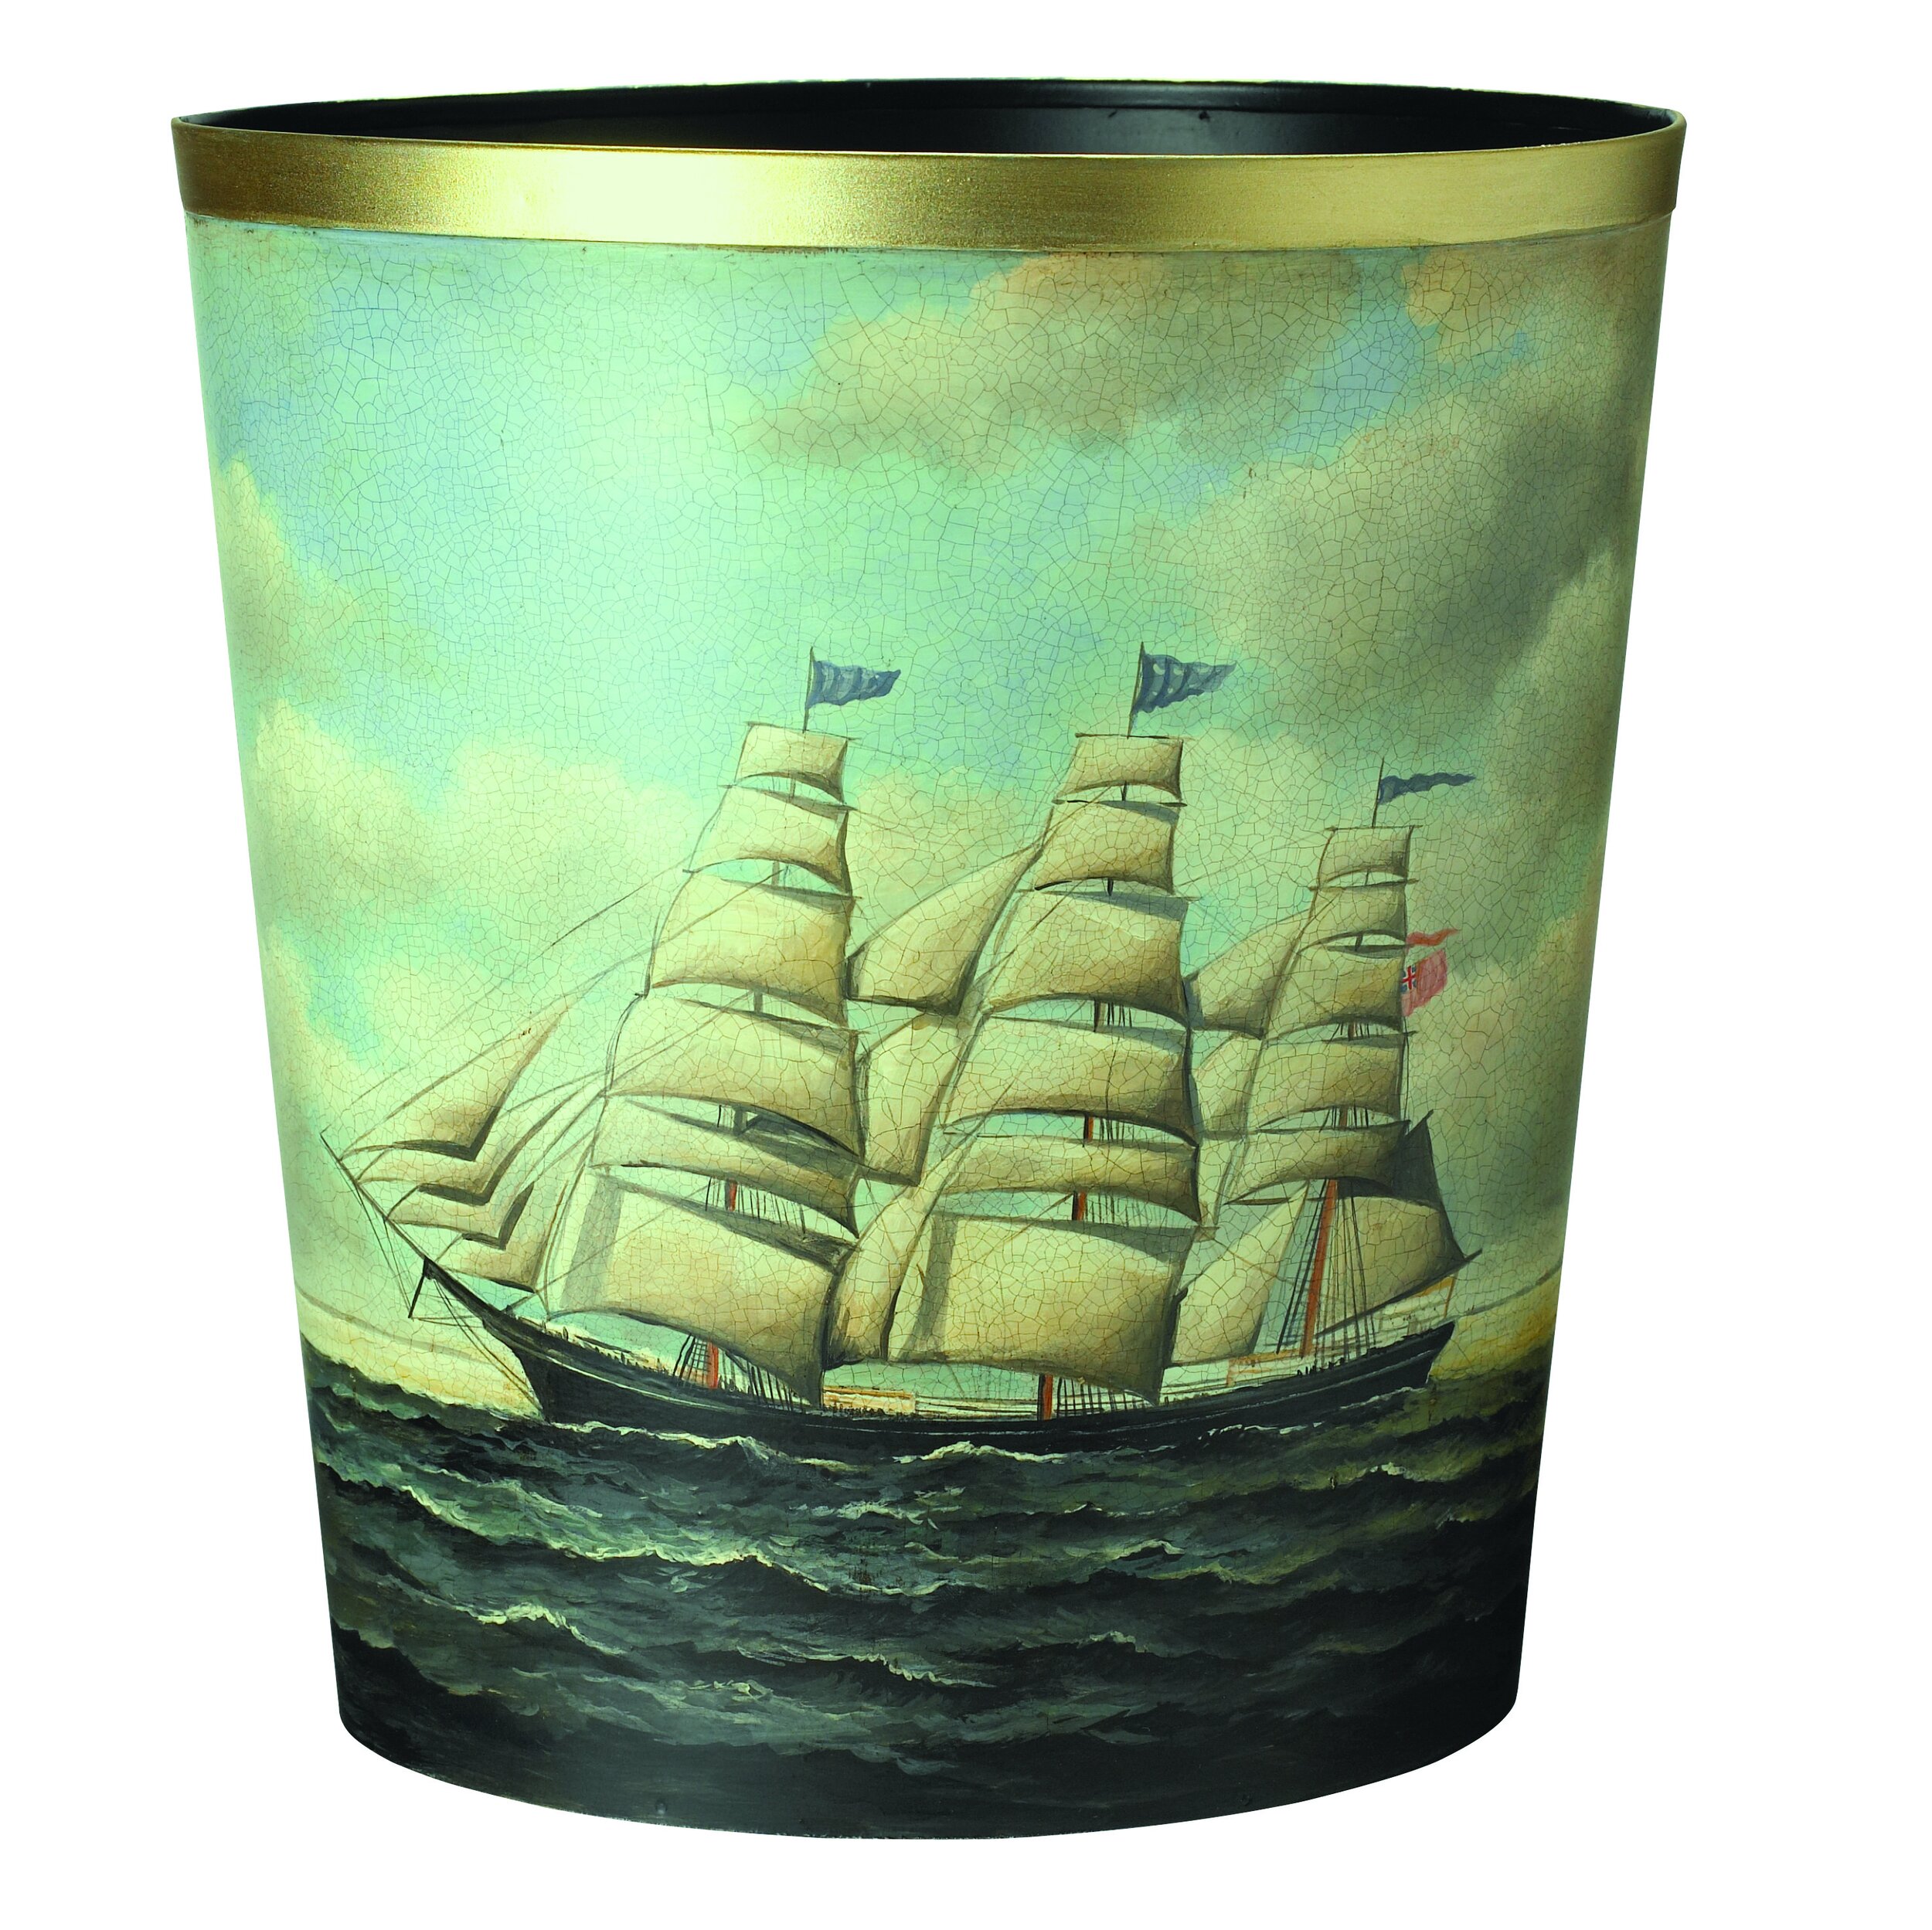 7.BESSELINK &amp; JONES Oval Waste Paper Bin, Hand Painted Original Design, Tea Clipper €550.49 